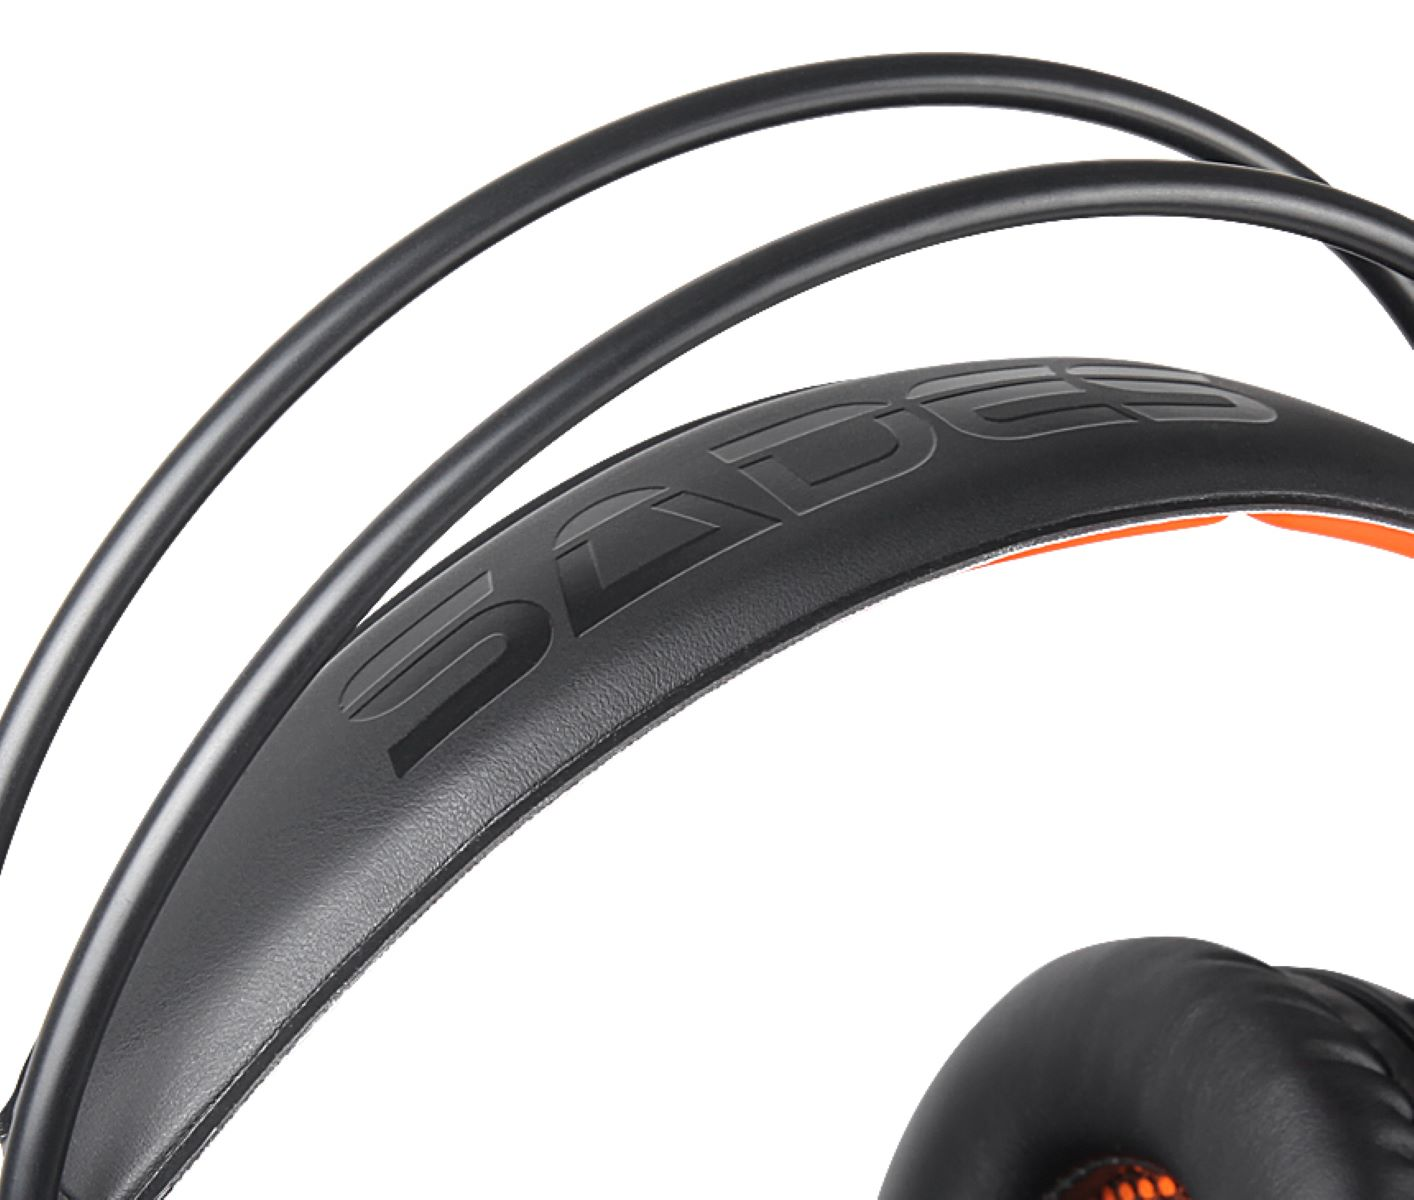 SADES A6, Over-ear Headset schwarz/orange Gaming